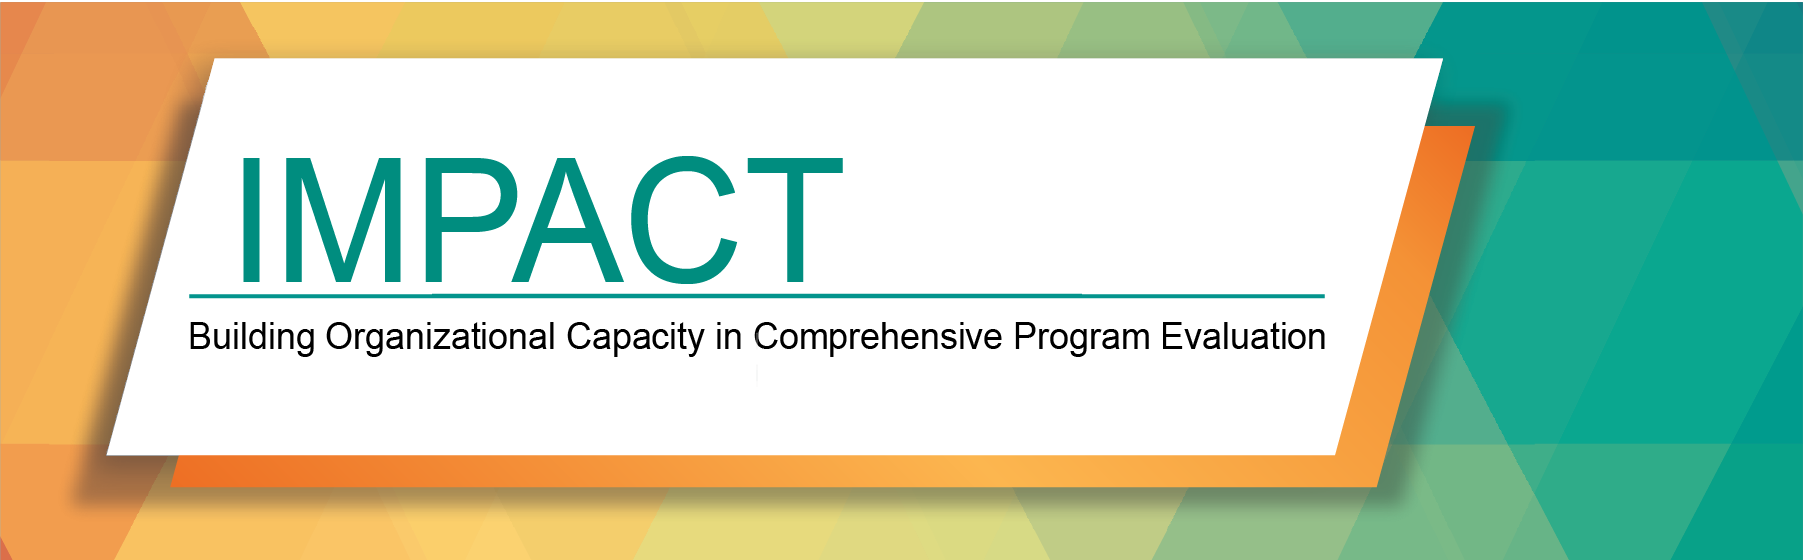 Impact: Building Organizational Capacity in Comprehensive Program Evaluation